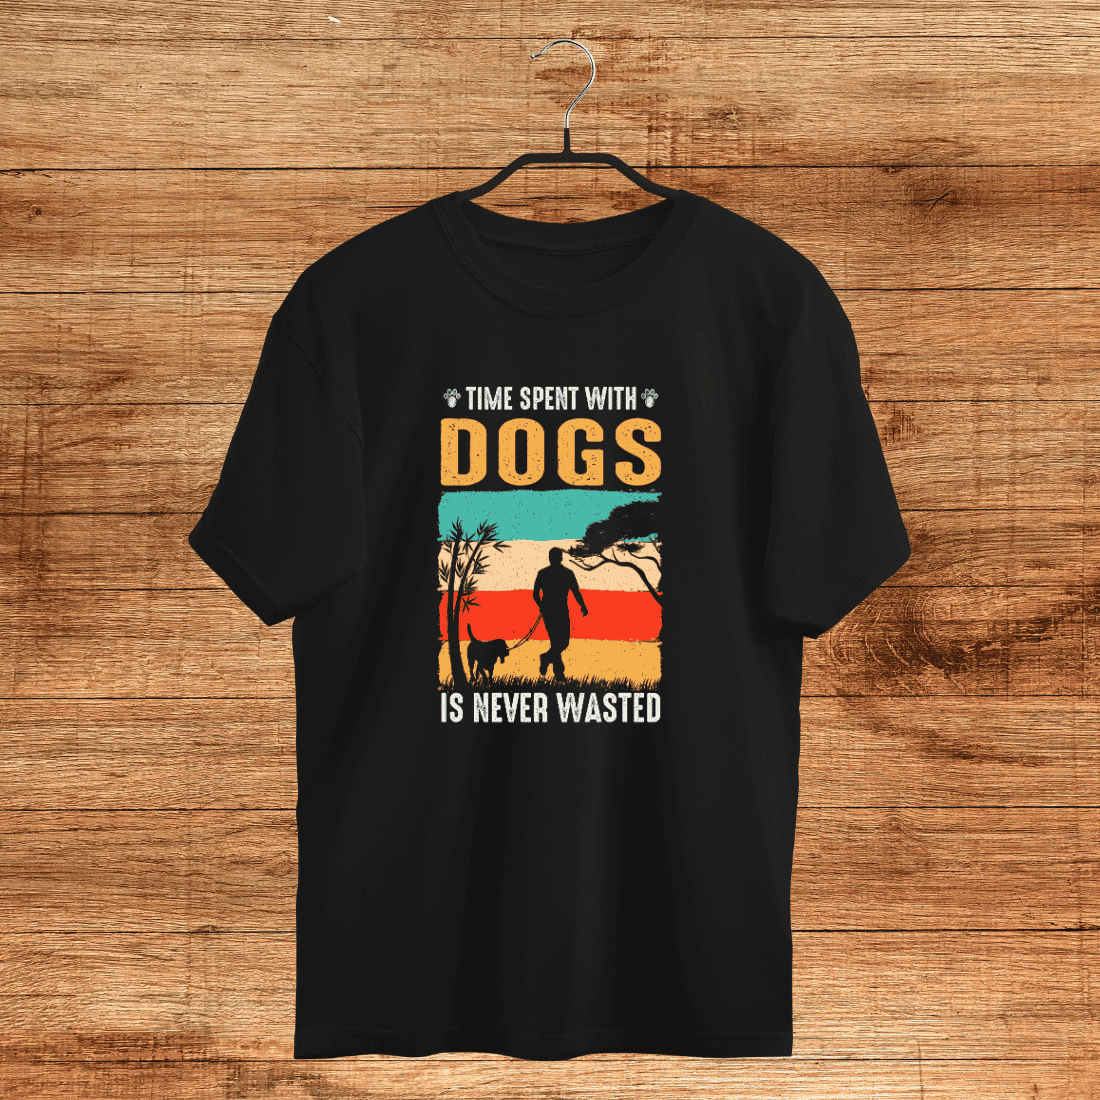 Perfect vivid dog graphic on a black t-shirt.